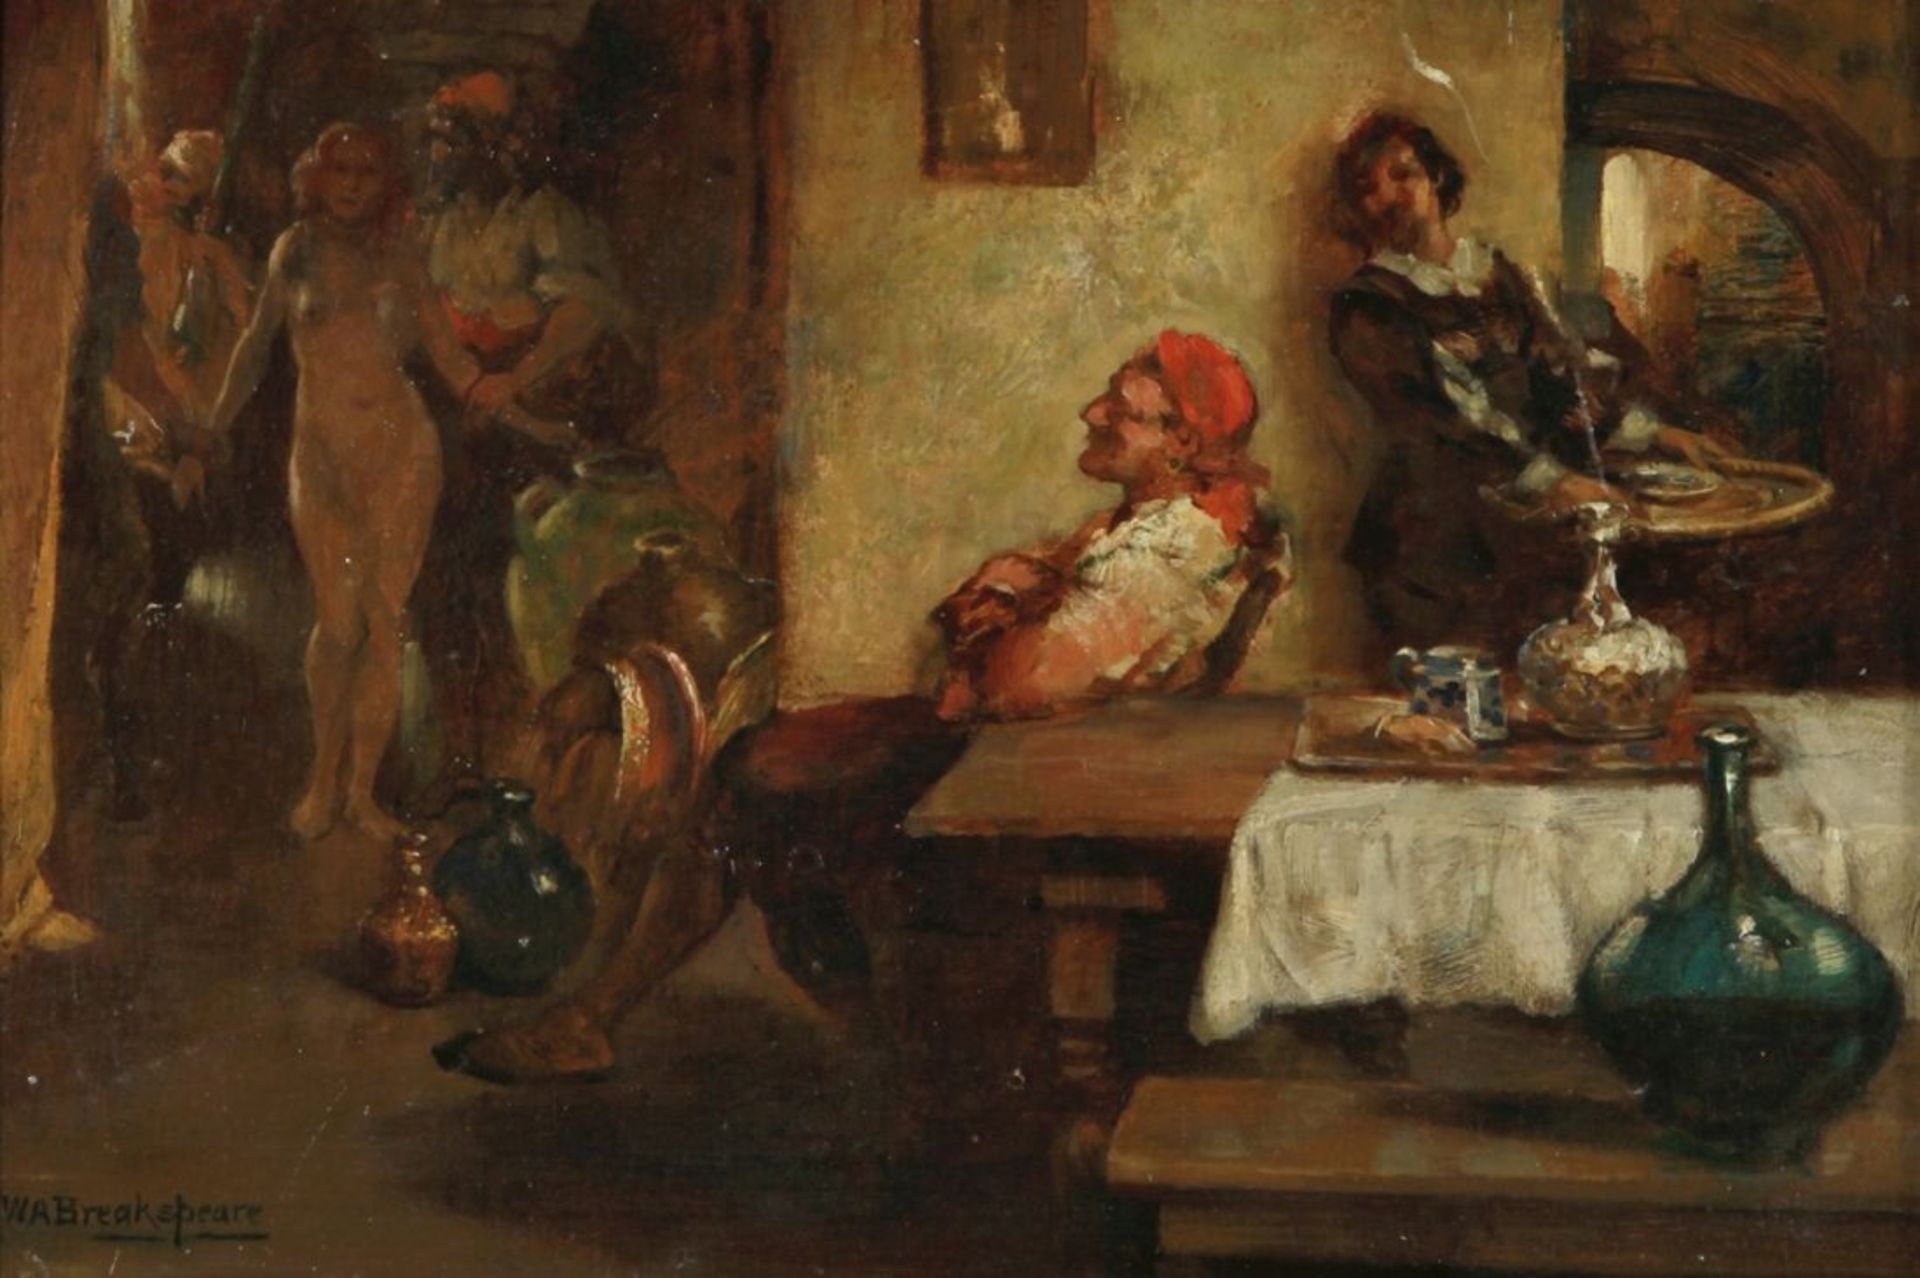 Breakspeare, William A., Maler aus Birmingham 1855 - 1914. "The Prize (Originaltitel)",sign., r